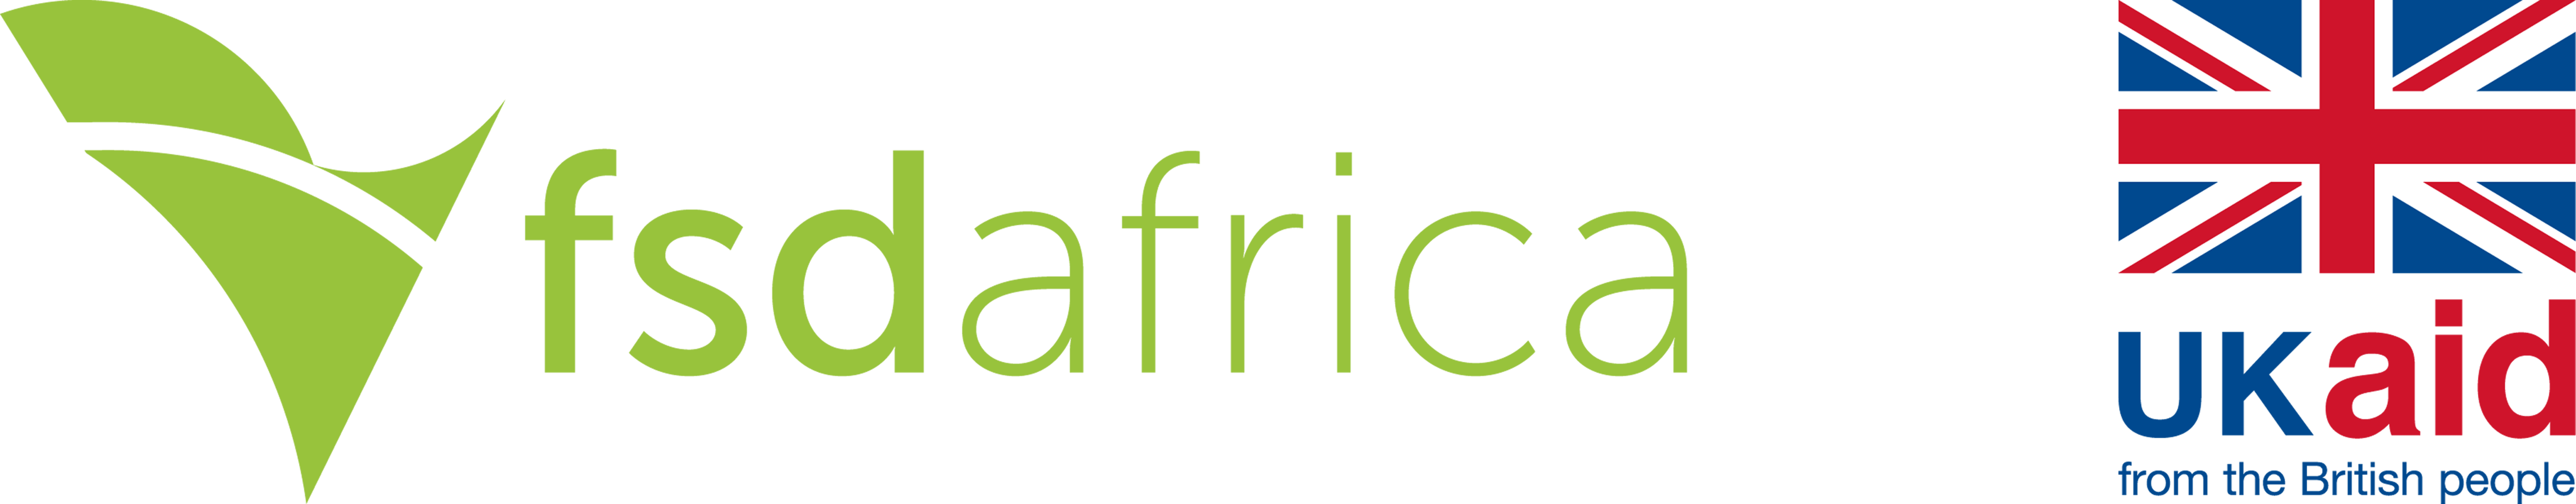 FSD Africa UK aid Logo